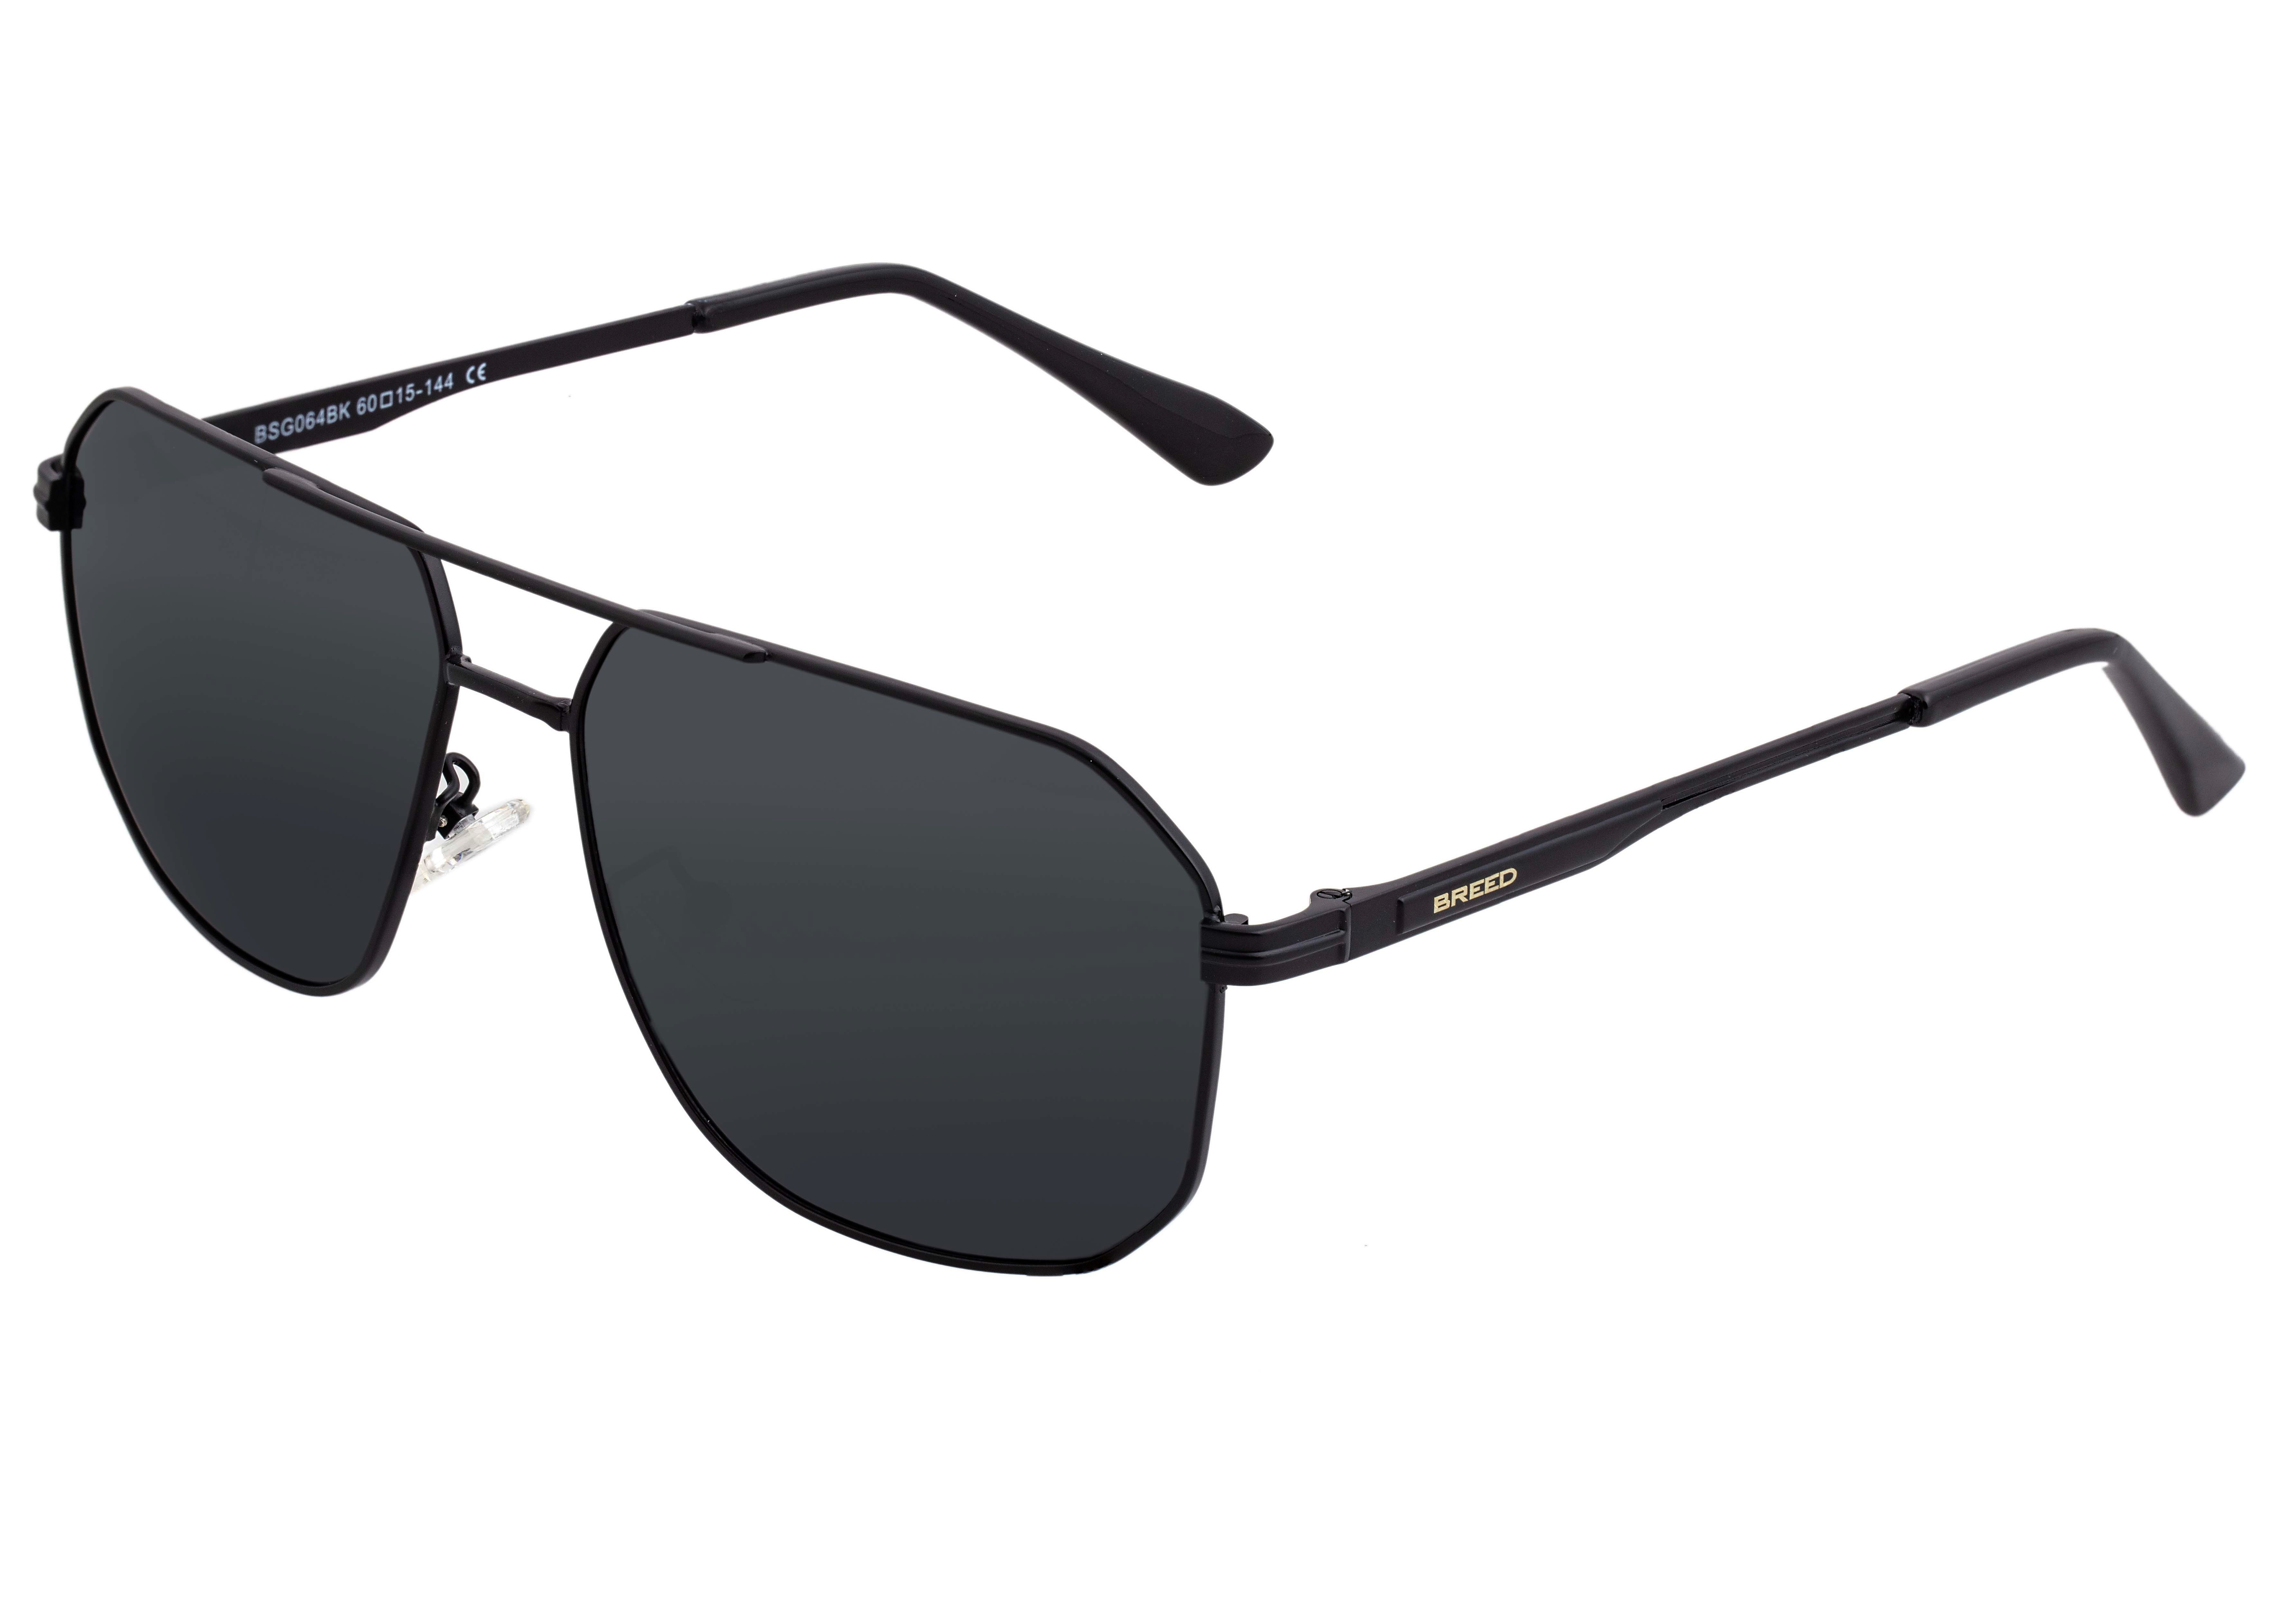 Breed Sunglasses Norma Polarized Sunglasses - Men's, Black/Black, One ...